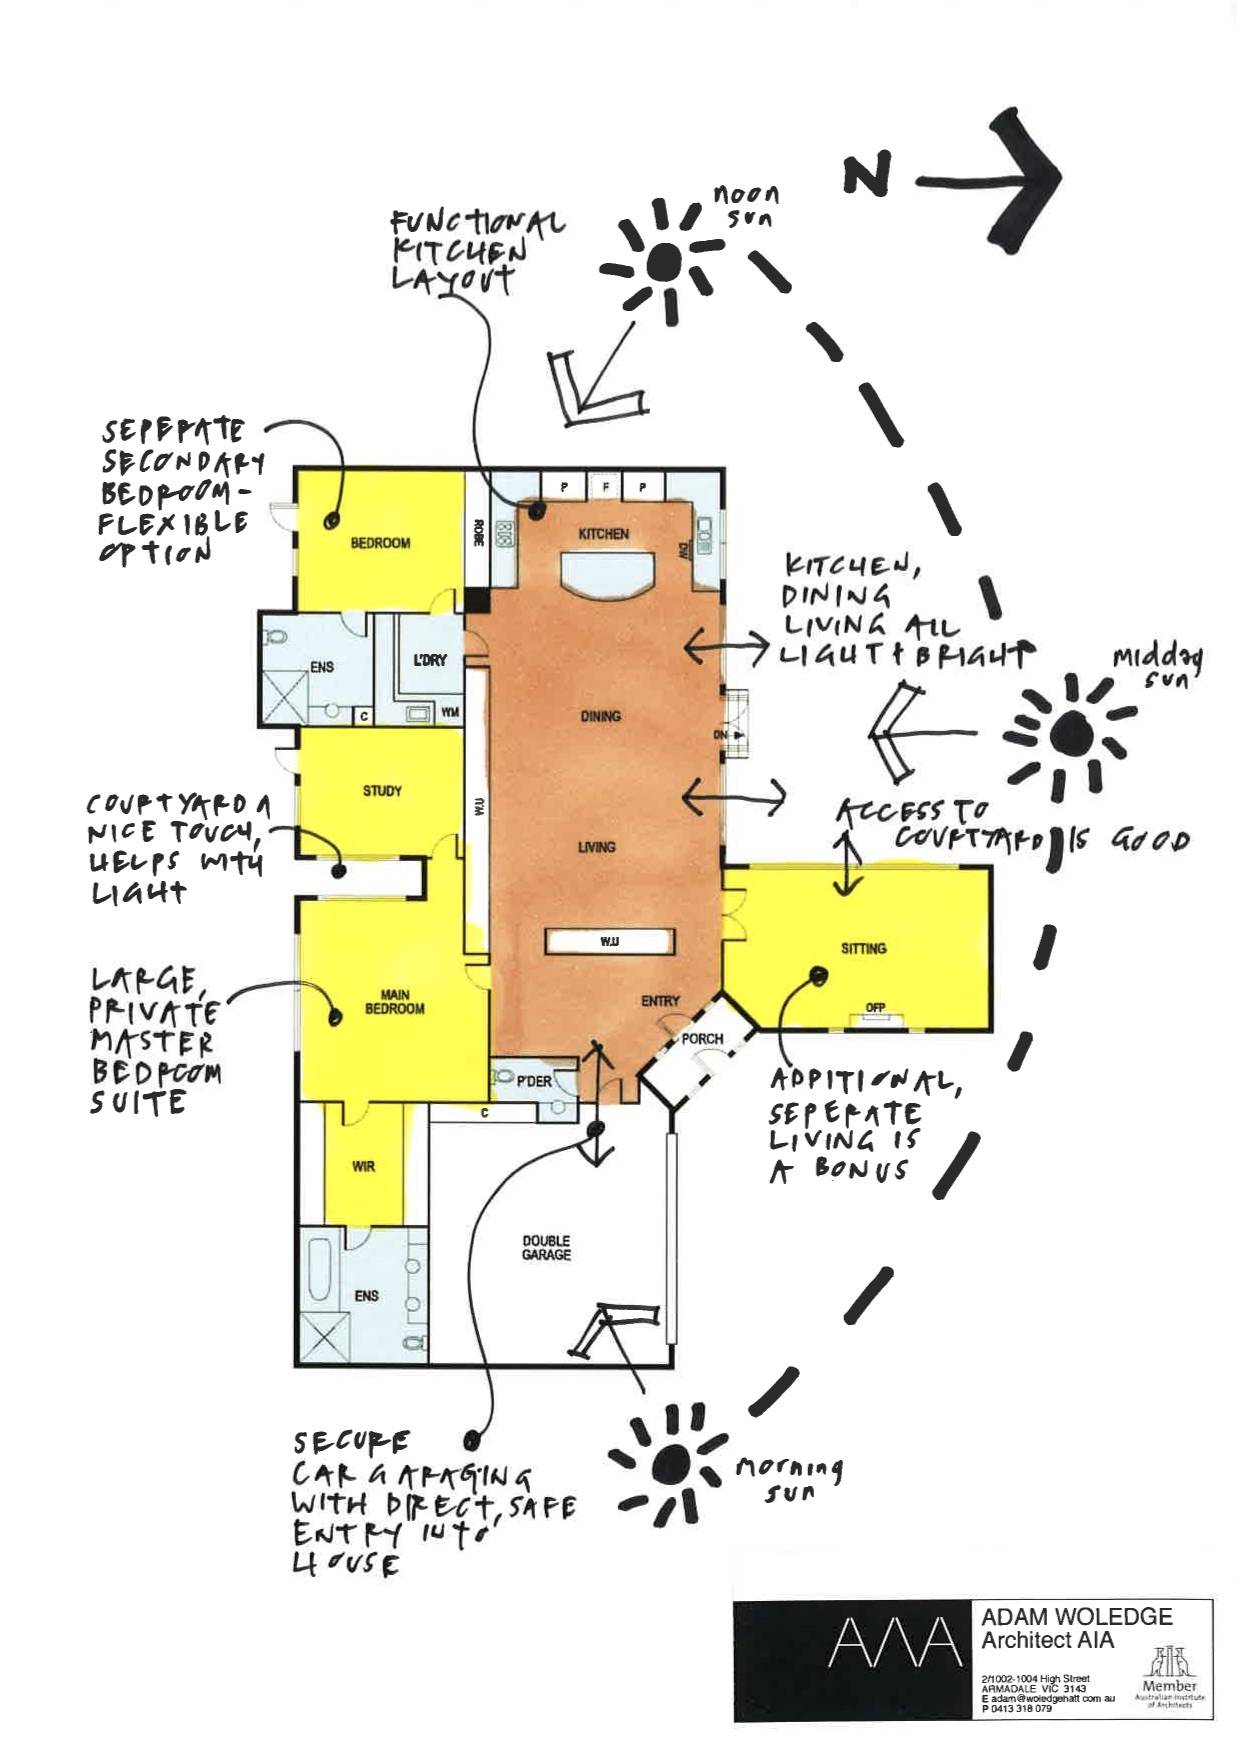 Floorplan Analysis